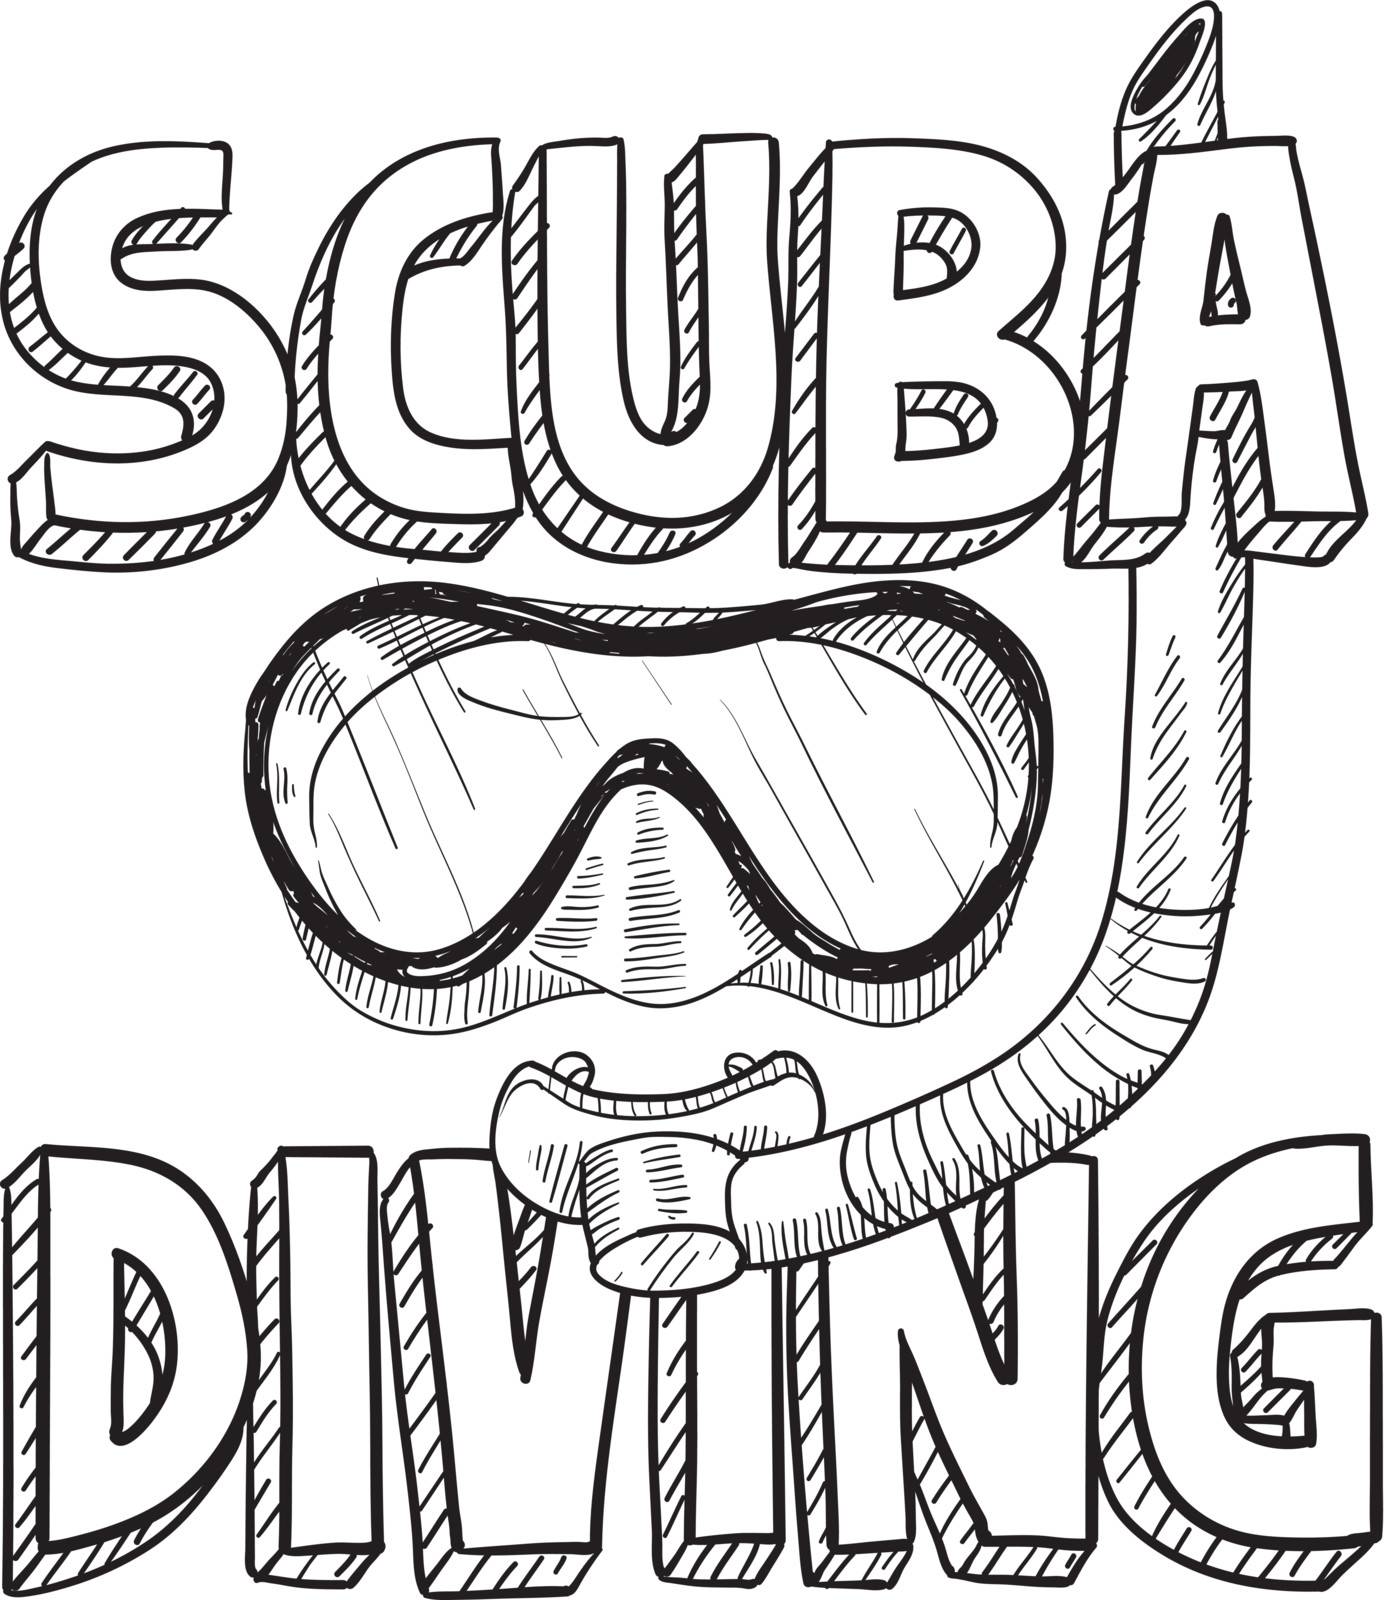 Scuba diving sketch by lhfgraphics